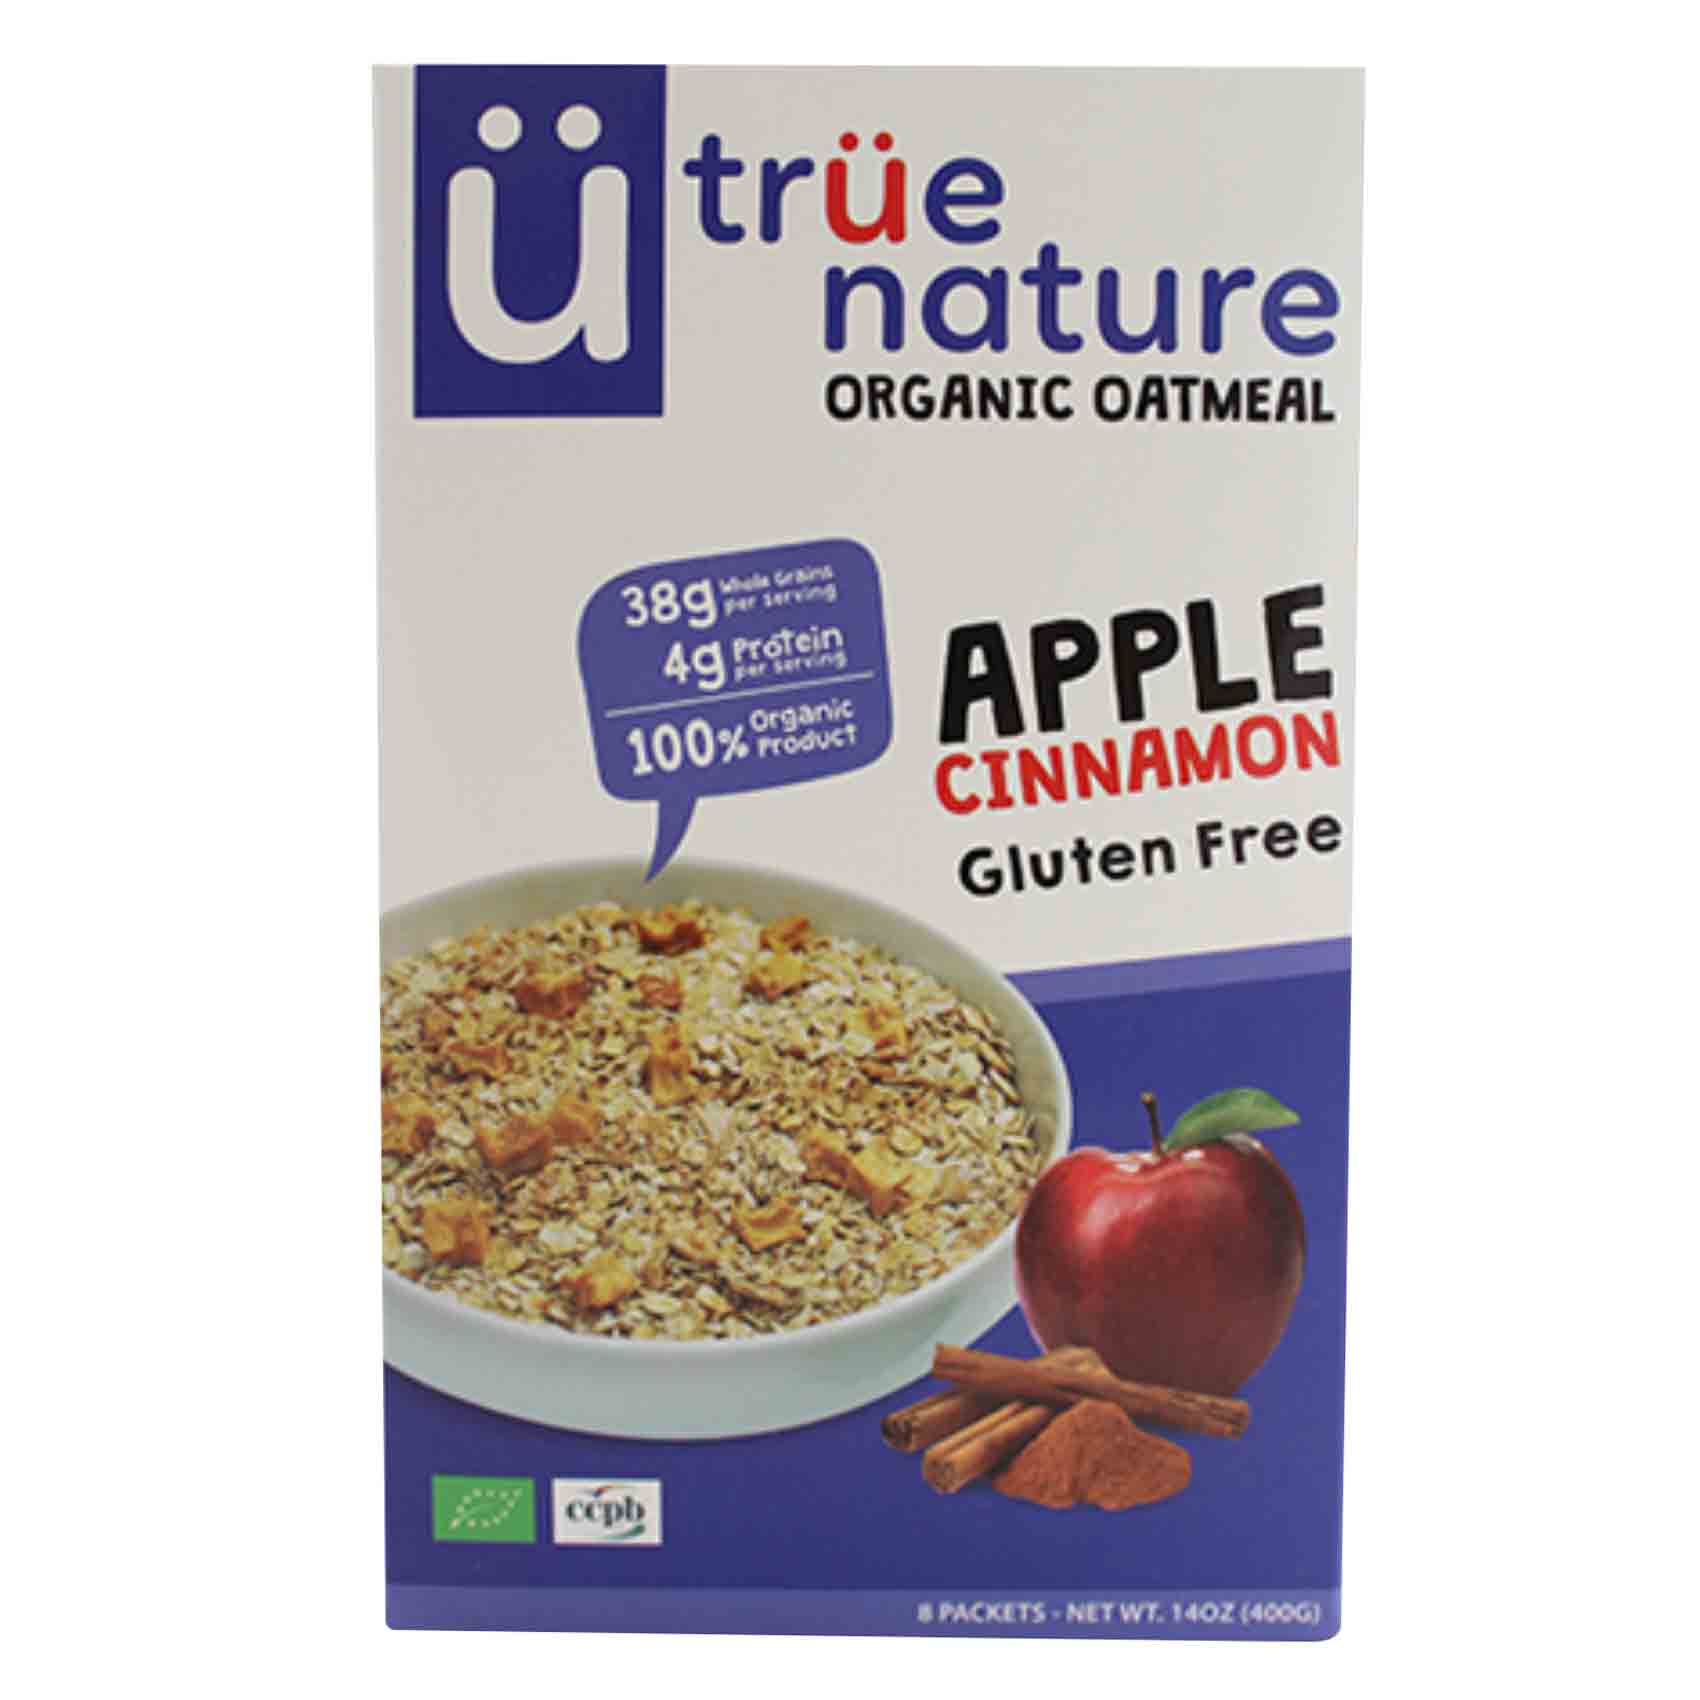 True Nature Organic Oatmeal Apple Cinnamon 400GR